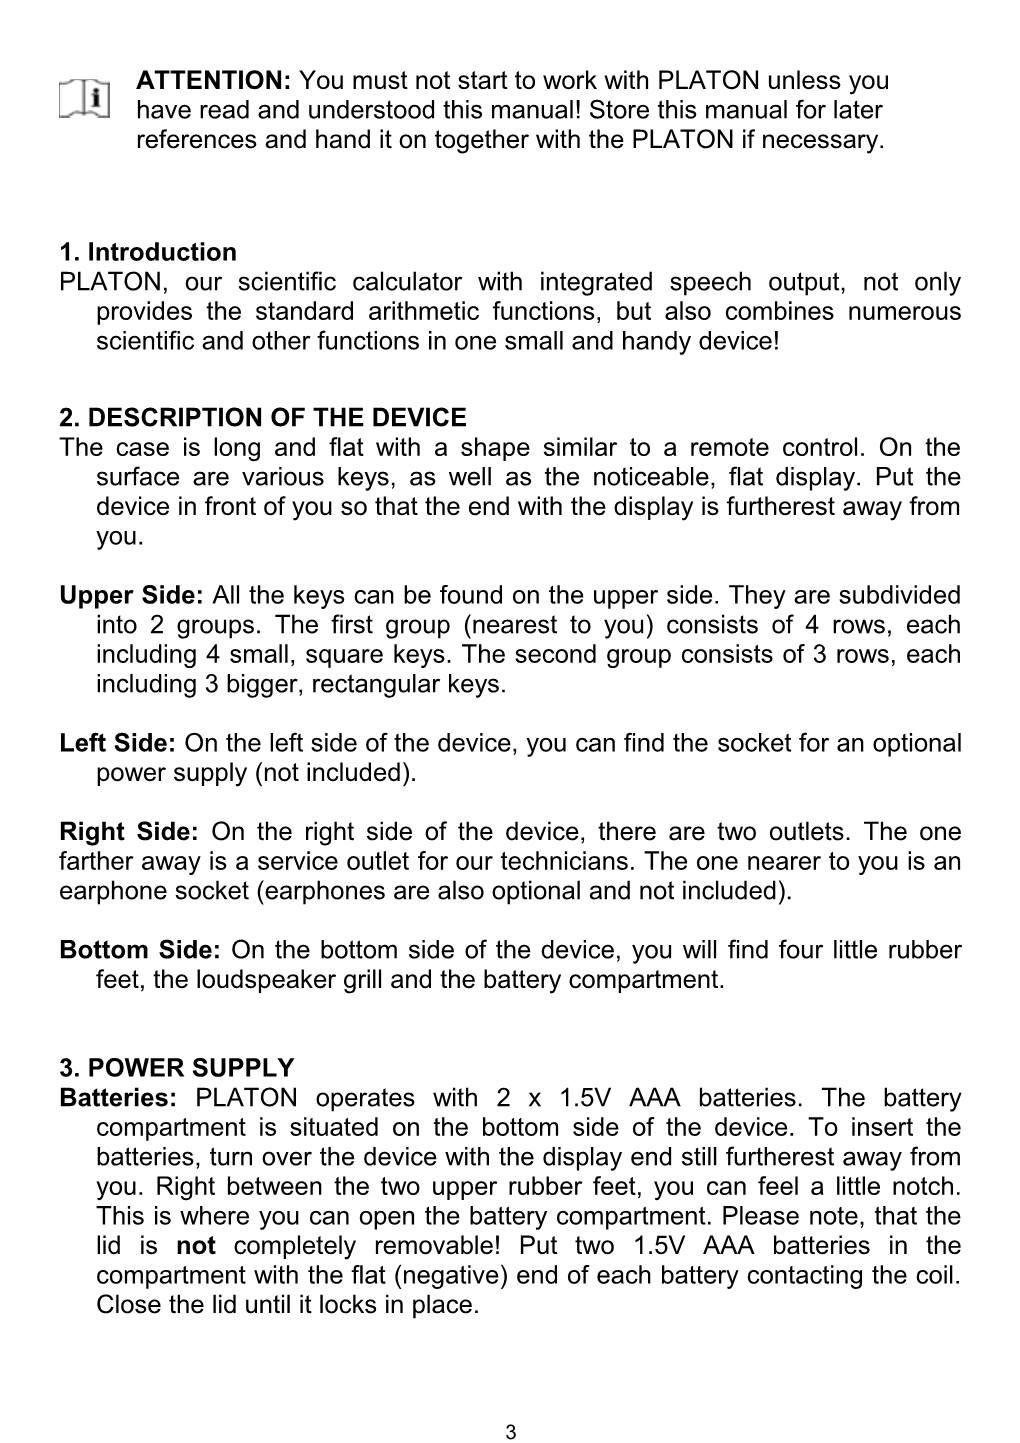 2. Description of the Device Page-03